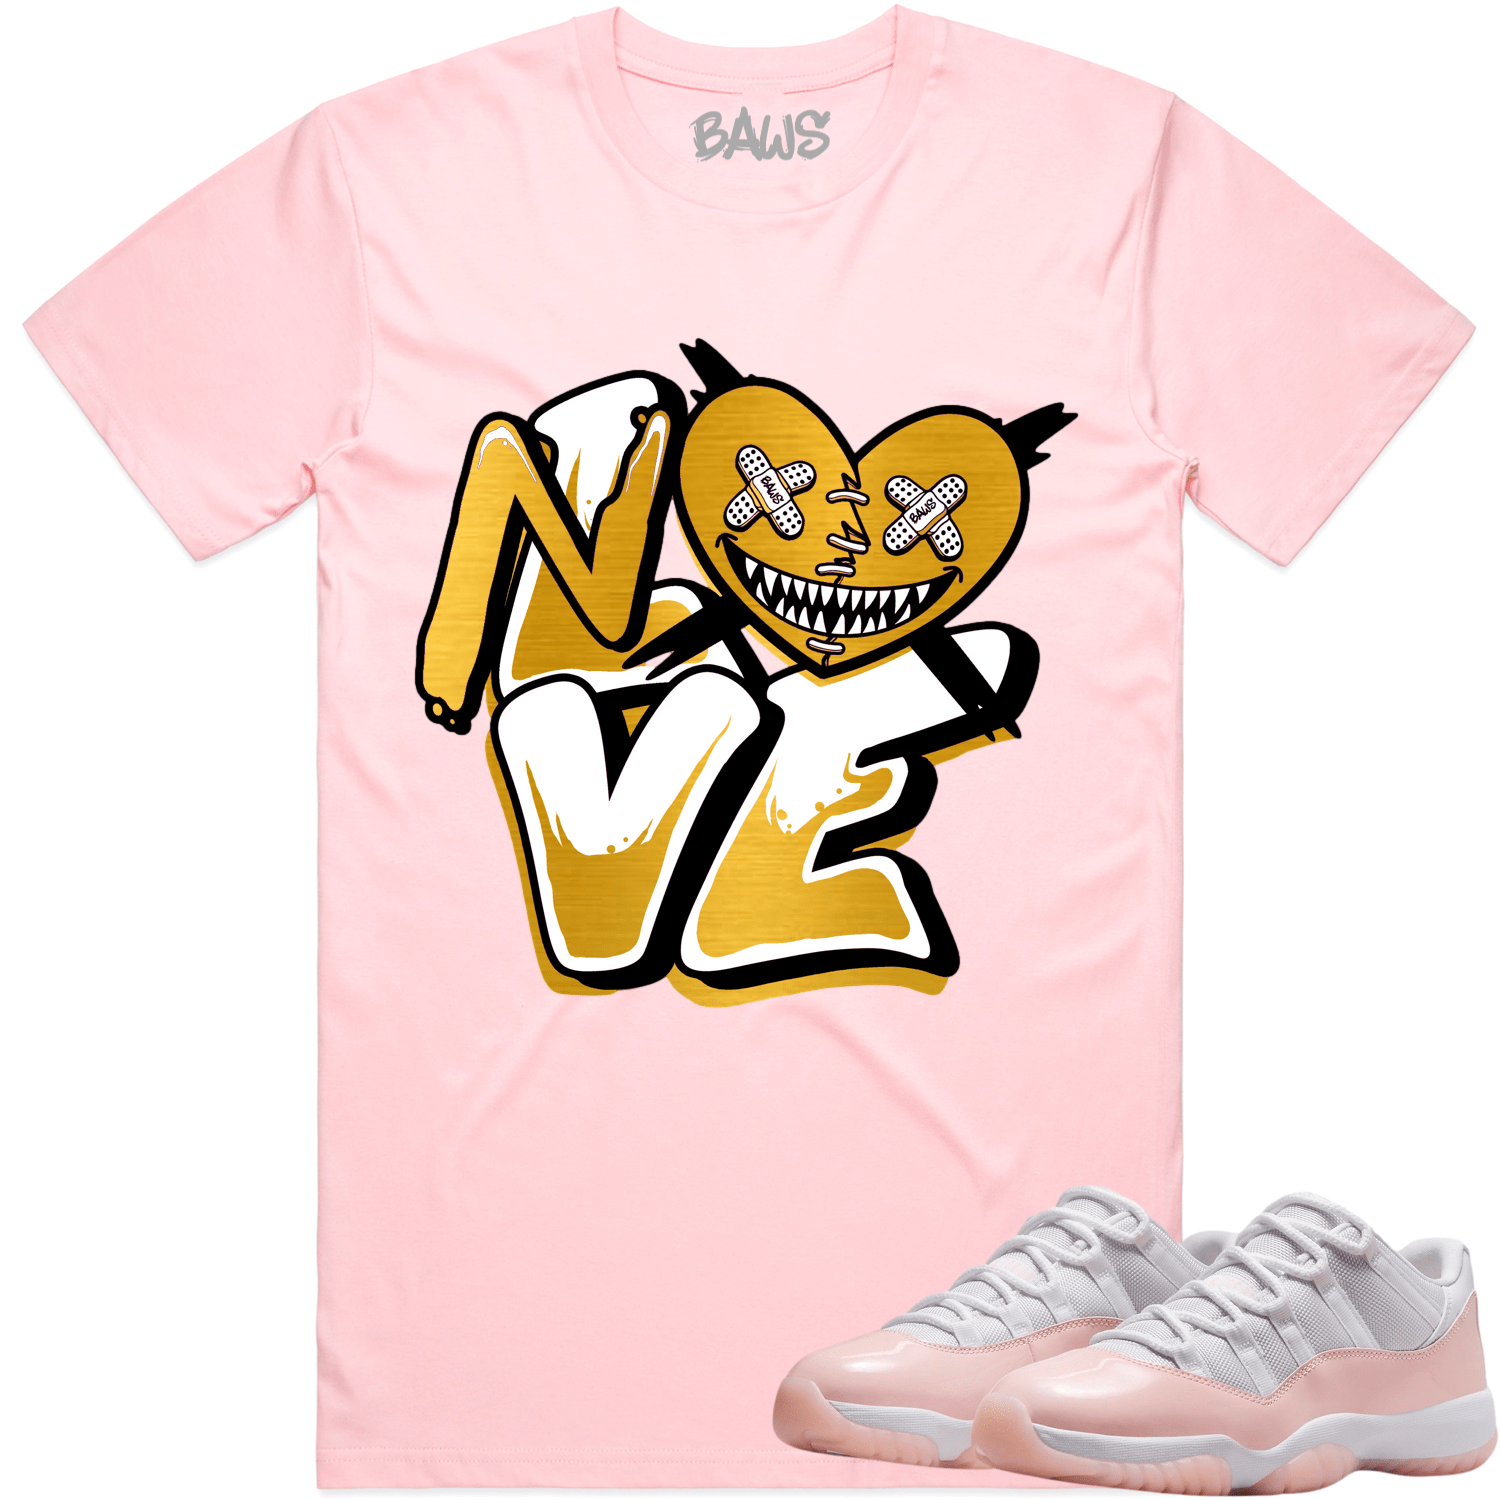 Legend Pink 11s Shirt - Jordan 11 Low Pink Sneaker Tees - No Love